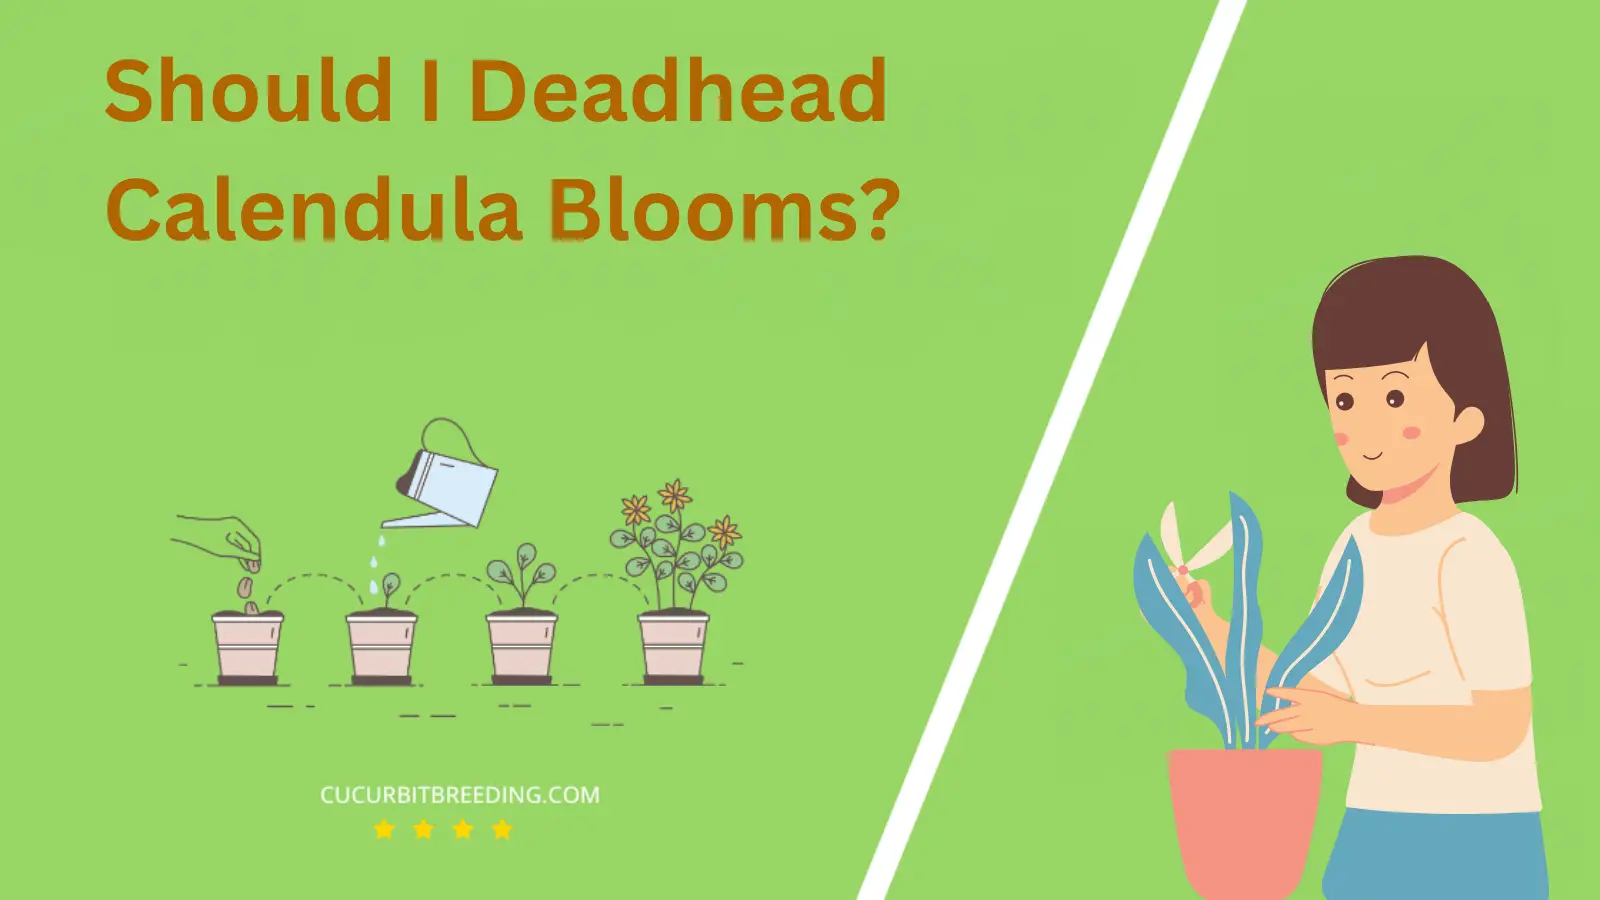 Should I Deadhead Calendula Blooms?